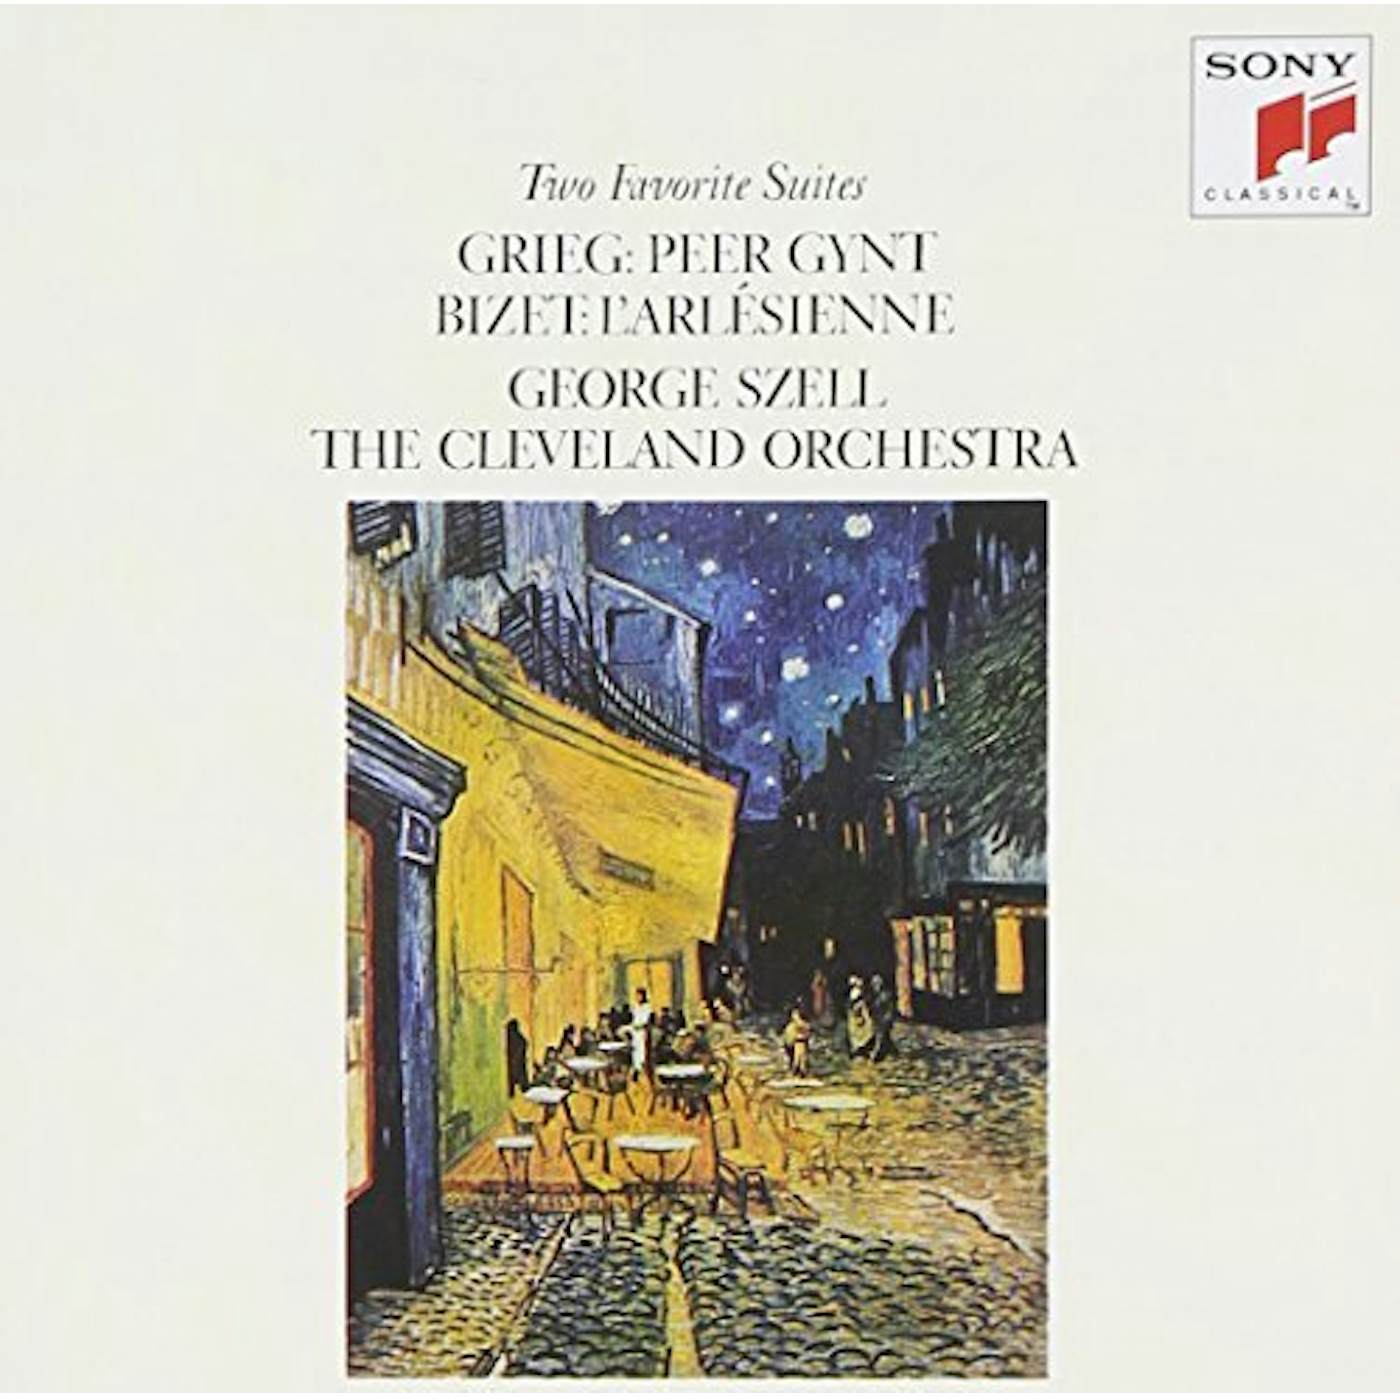 George Szell GRIEG: PEER GYNT / BIZET: L'ARLESIENN CD